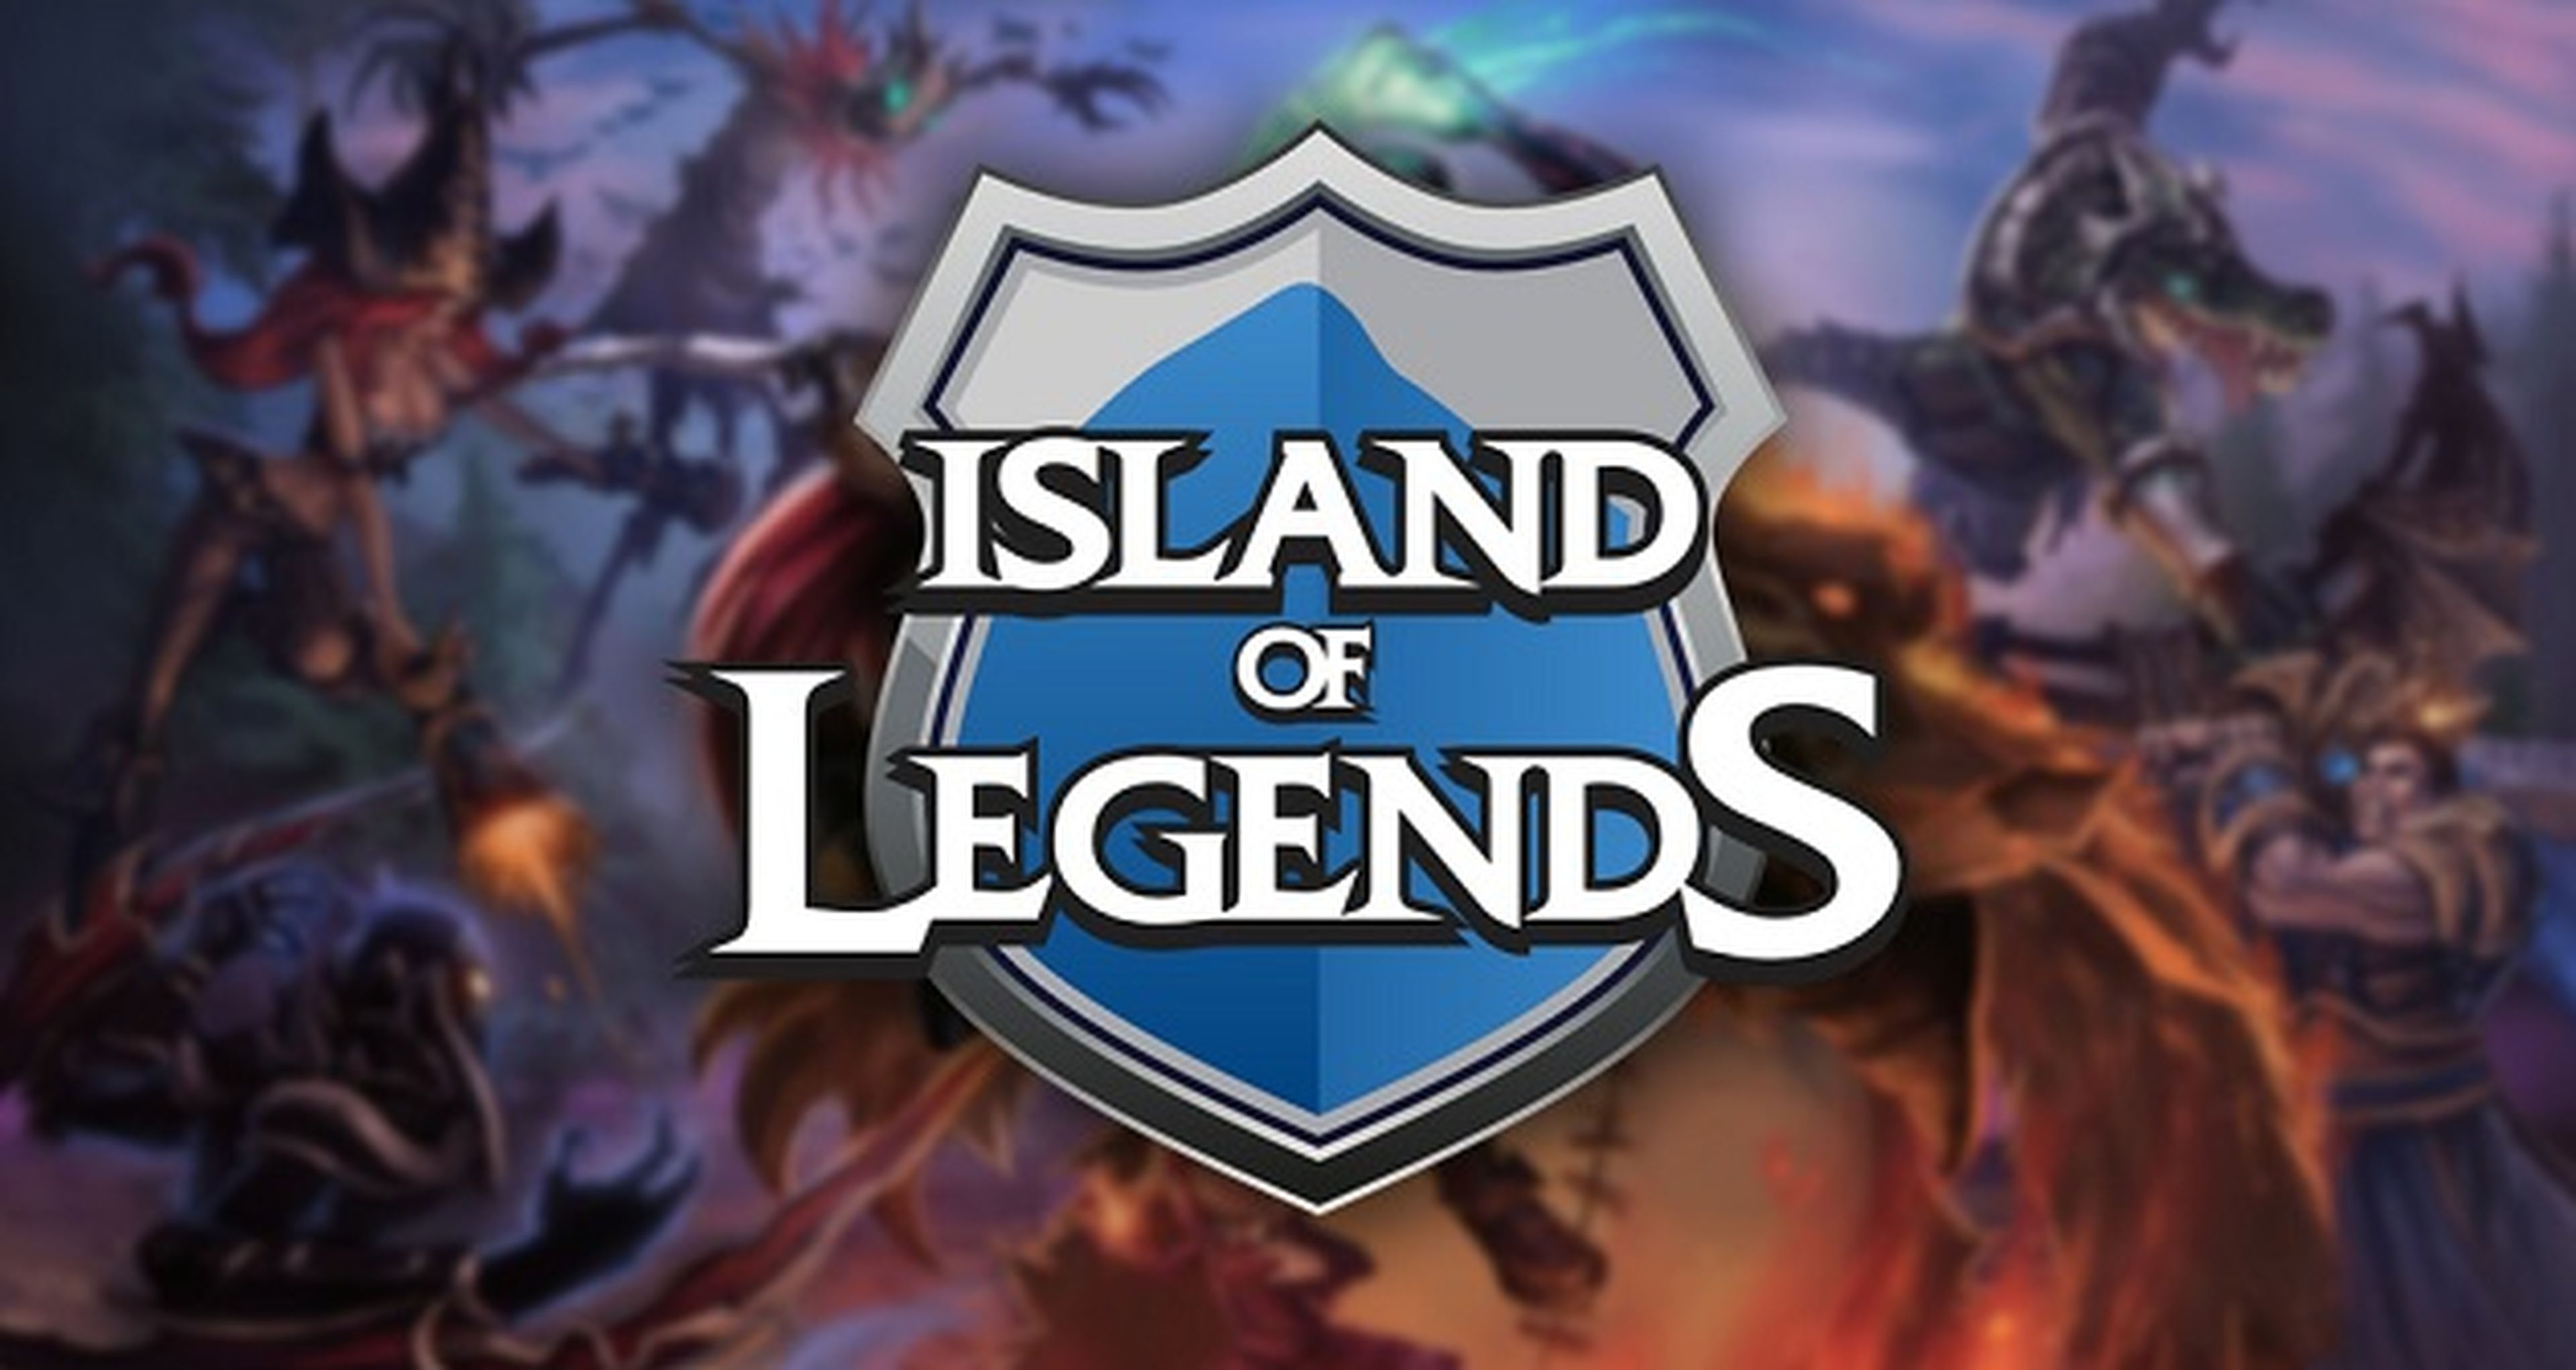 Gamers2 no acudirá a Island of Legends